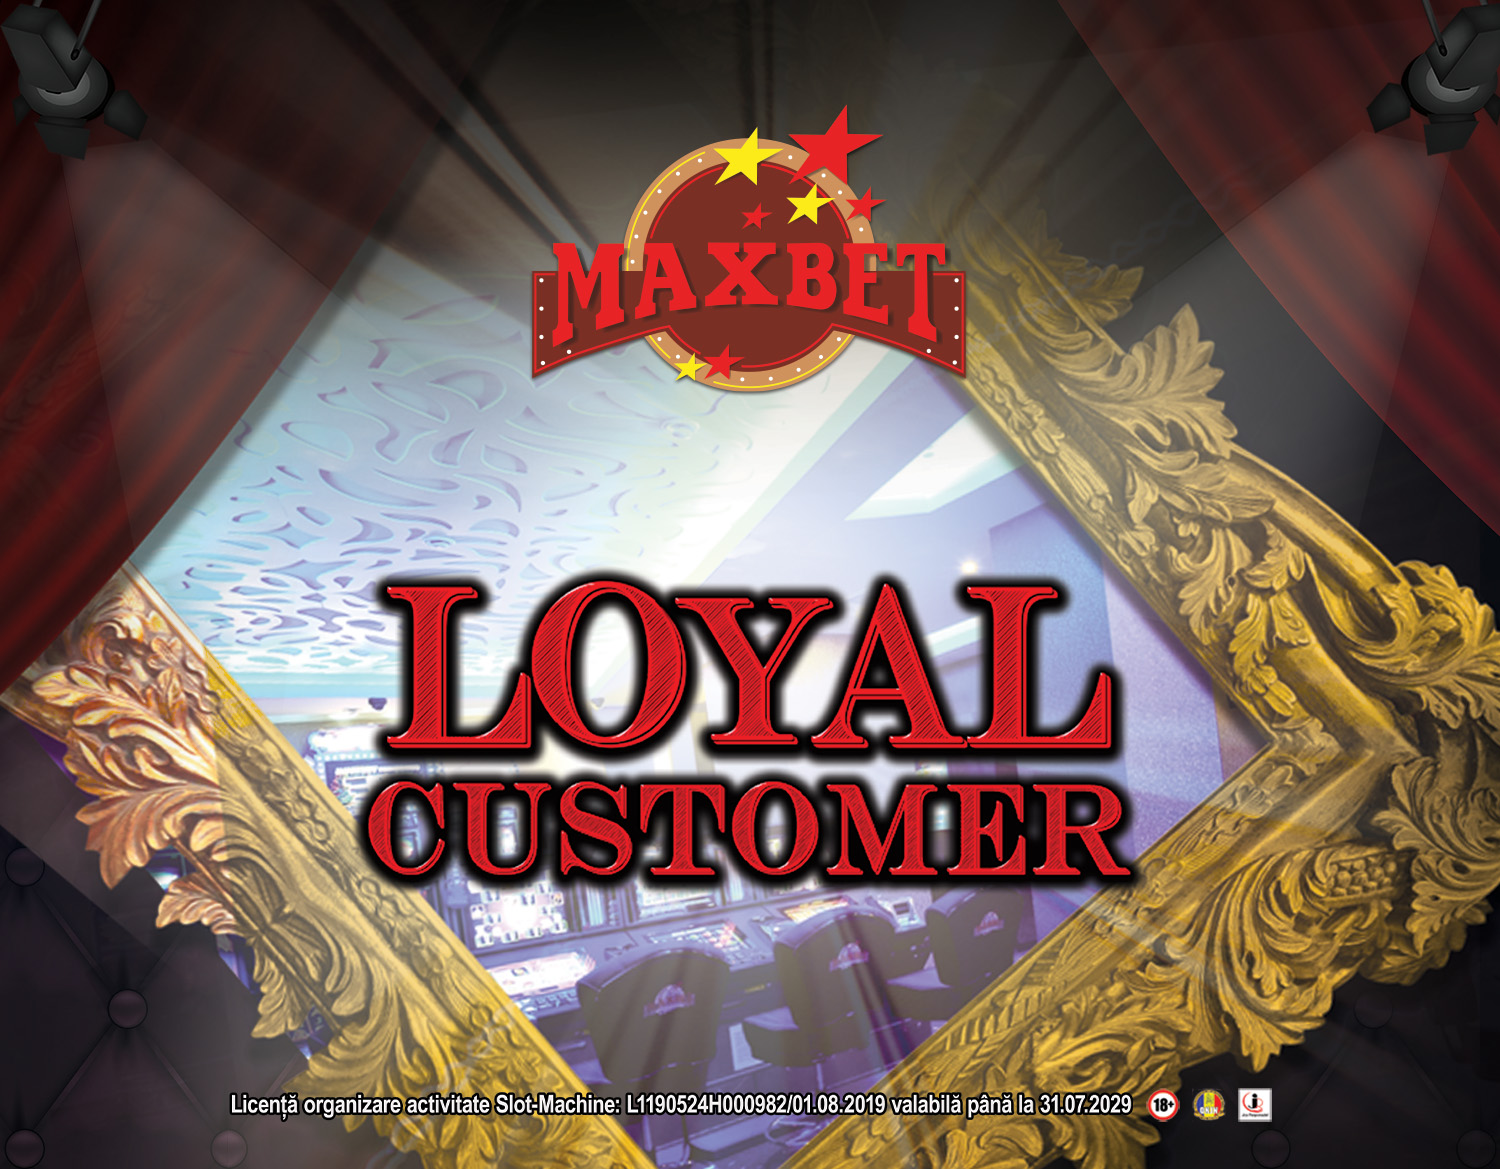 Loyal Customer